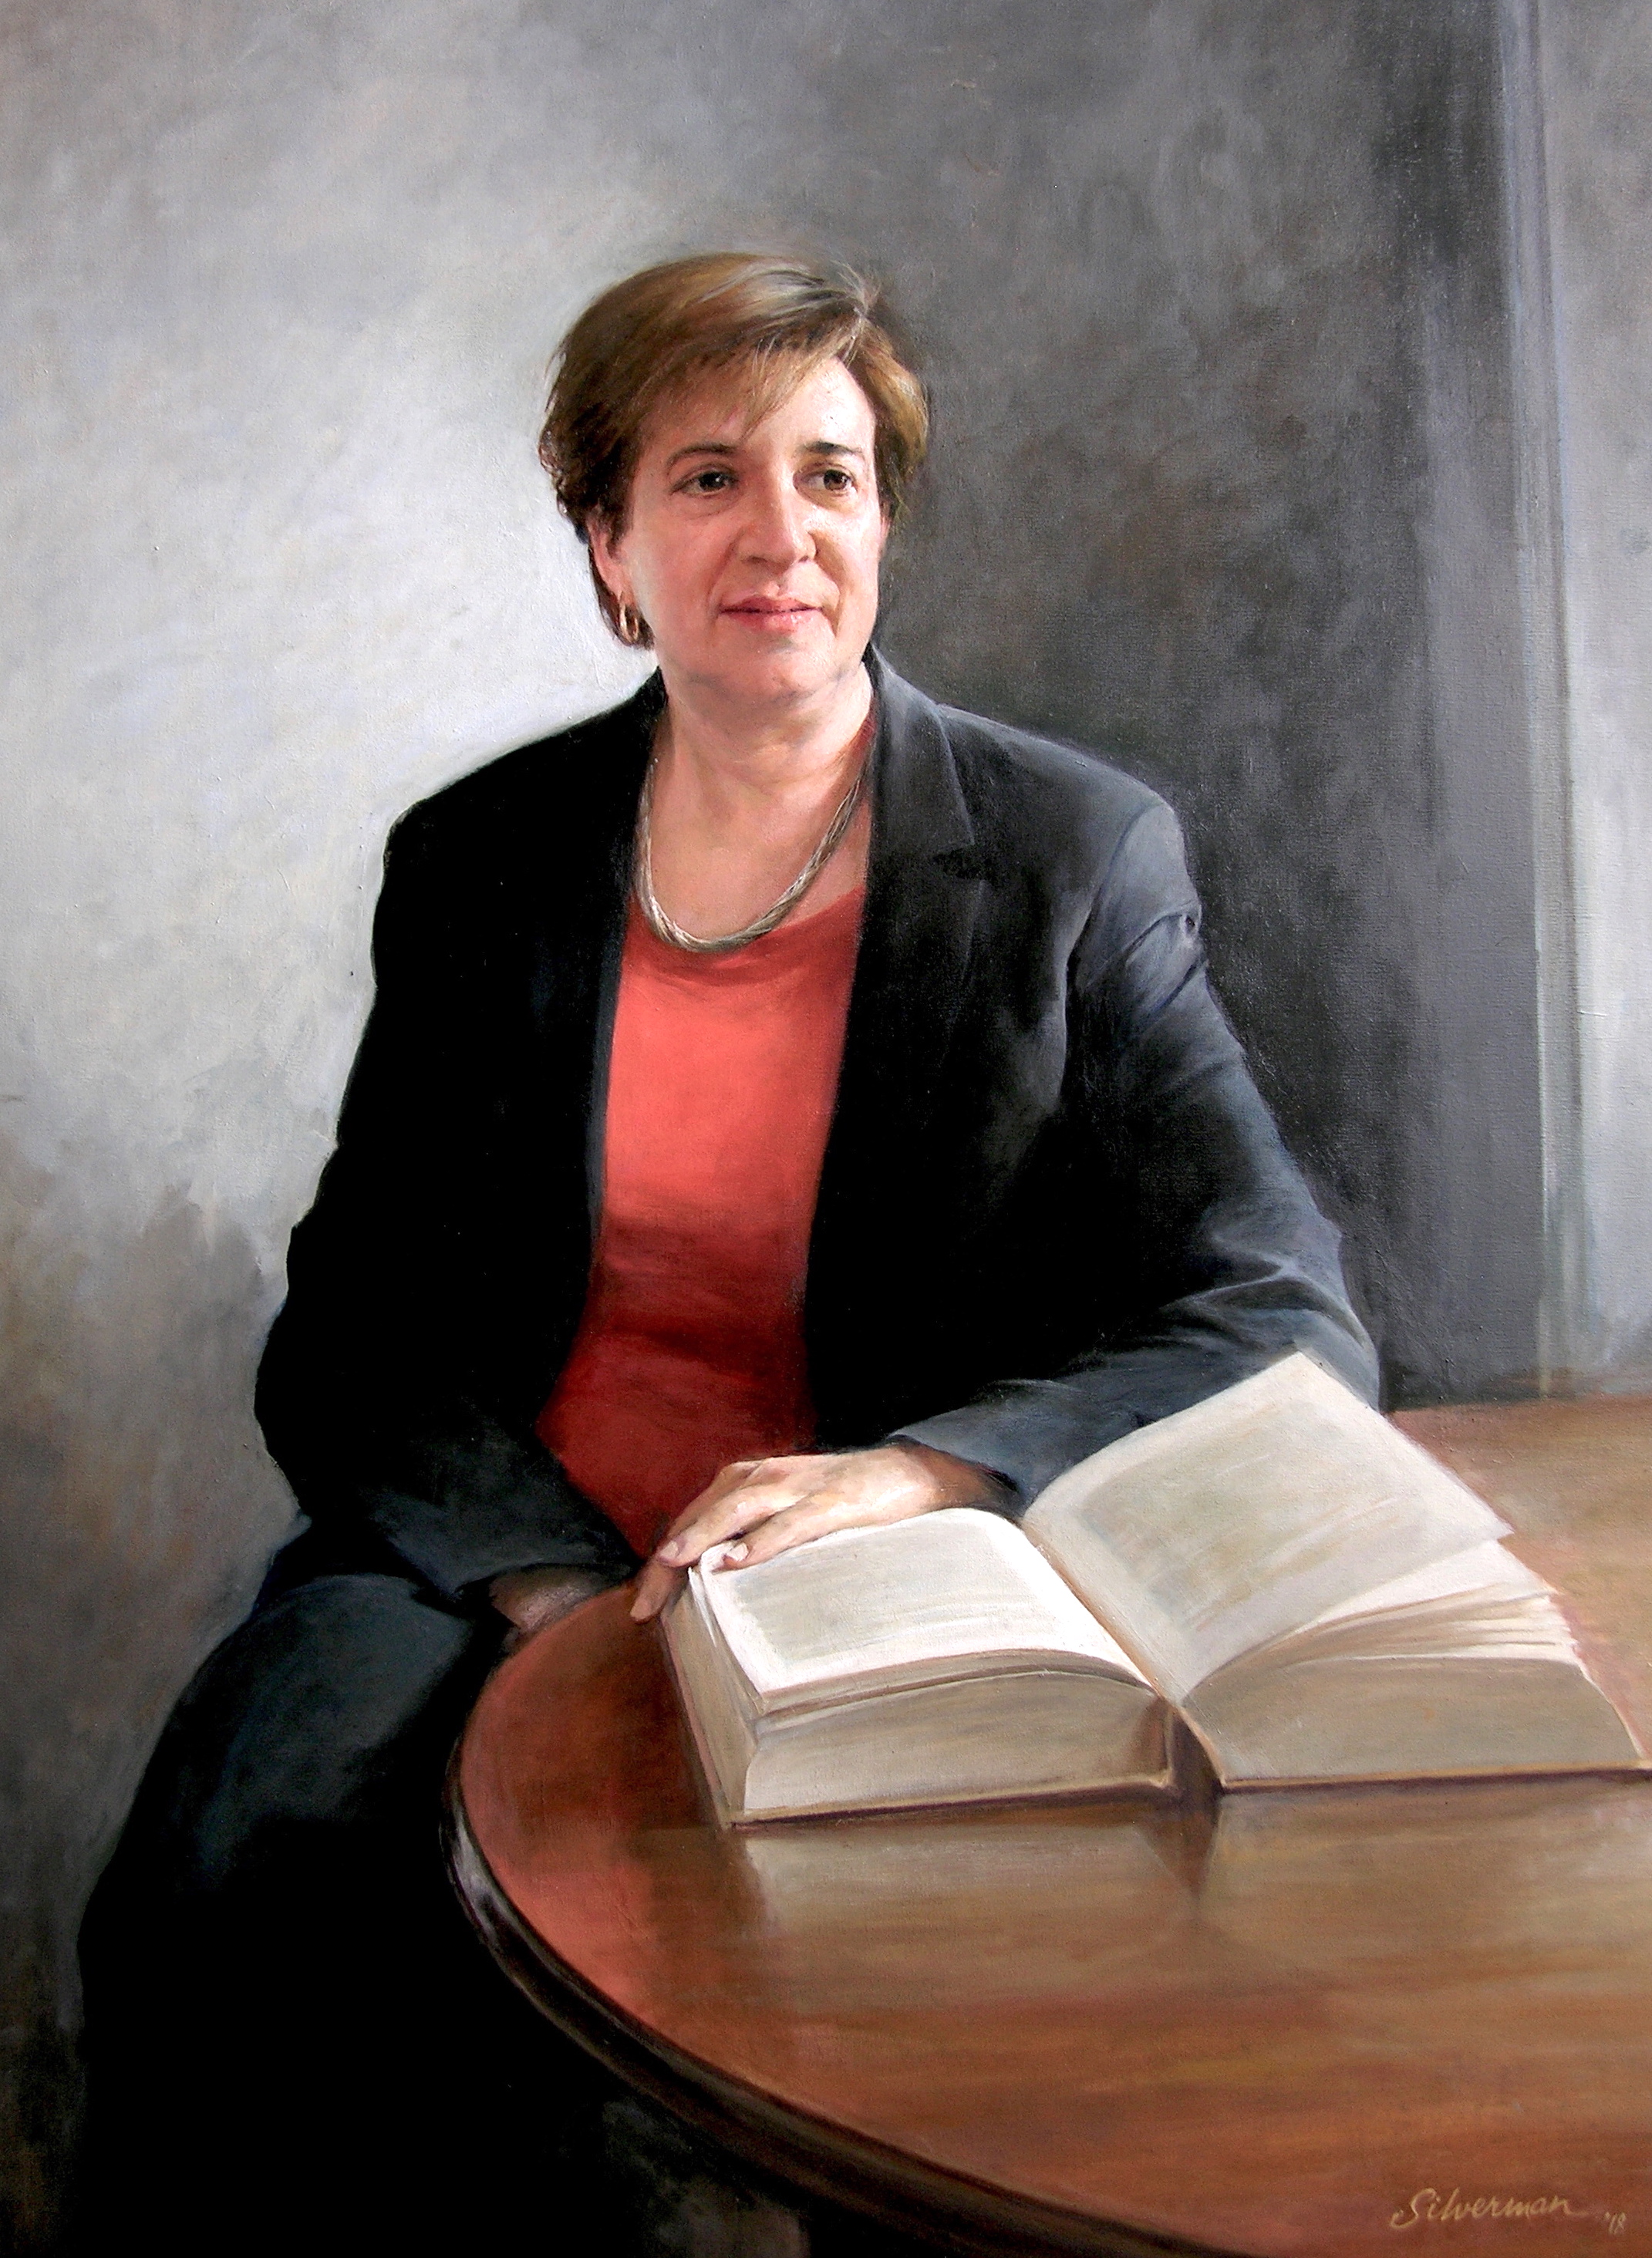 Assoc. Justice Elena Kagan, 2018 